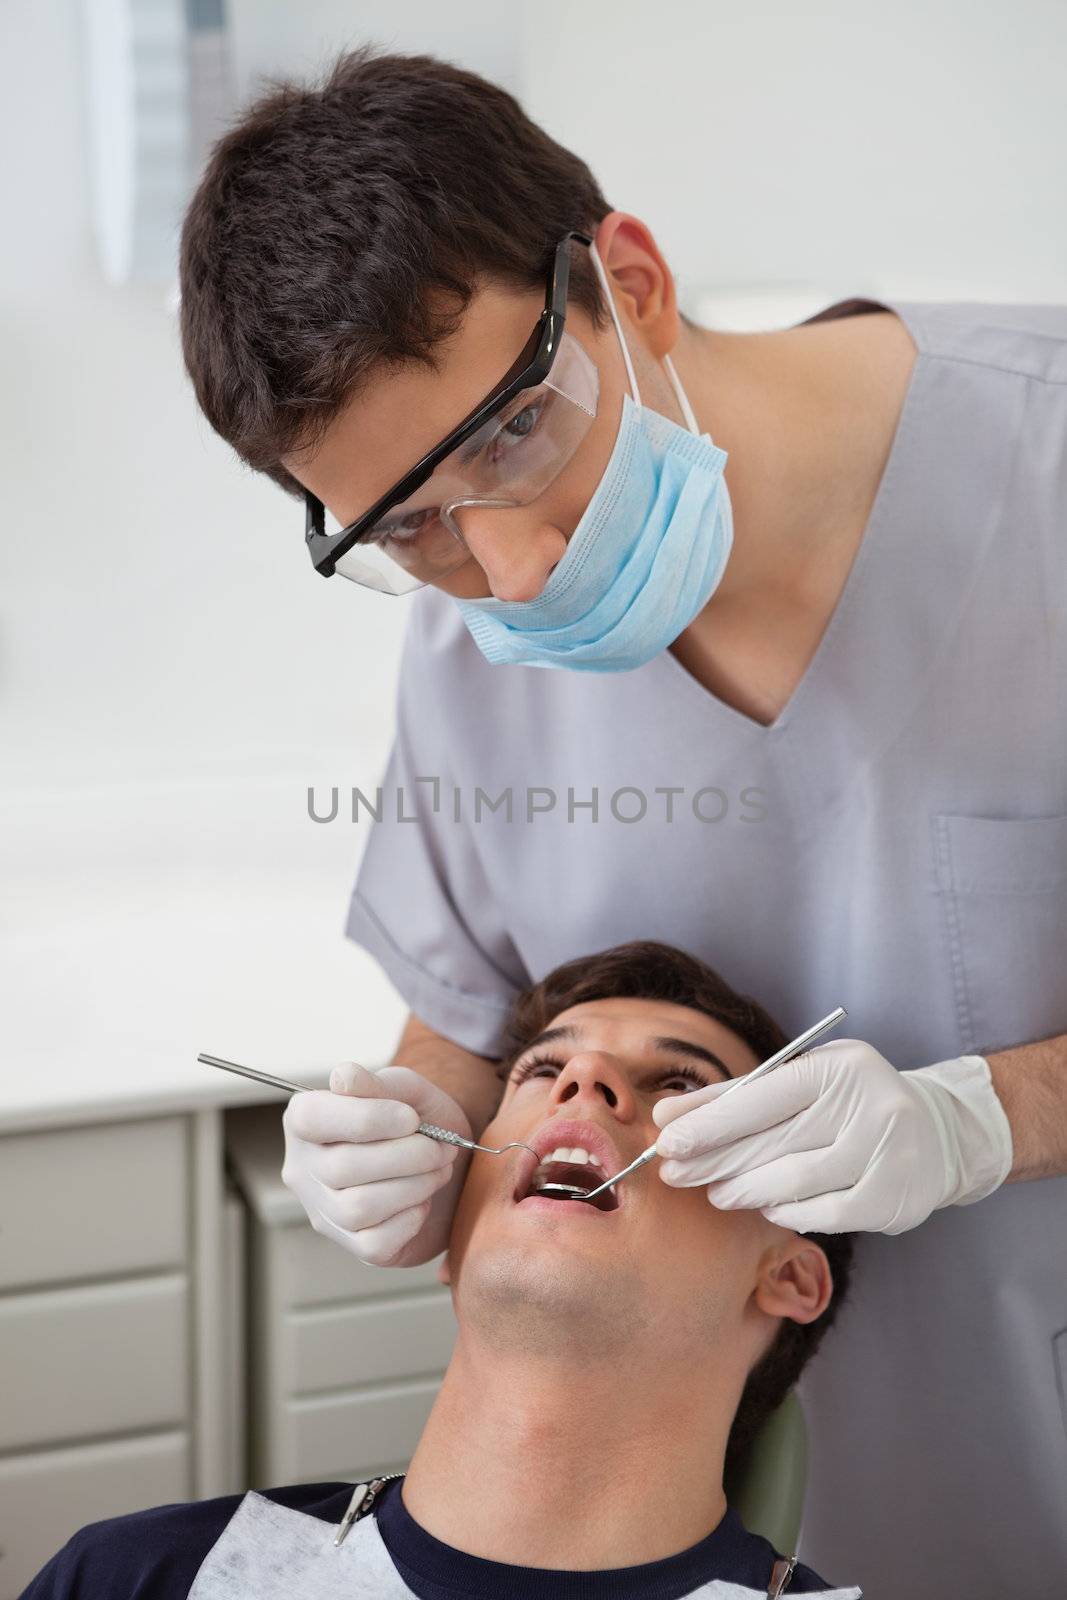 Dentist examining patient's teeth at clinic